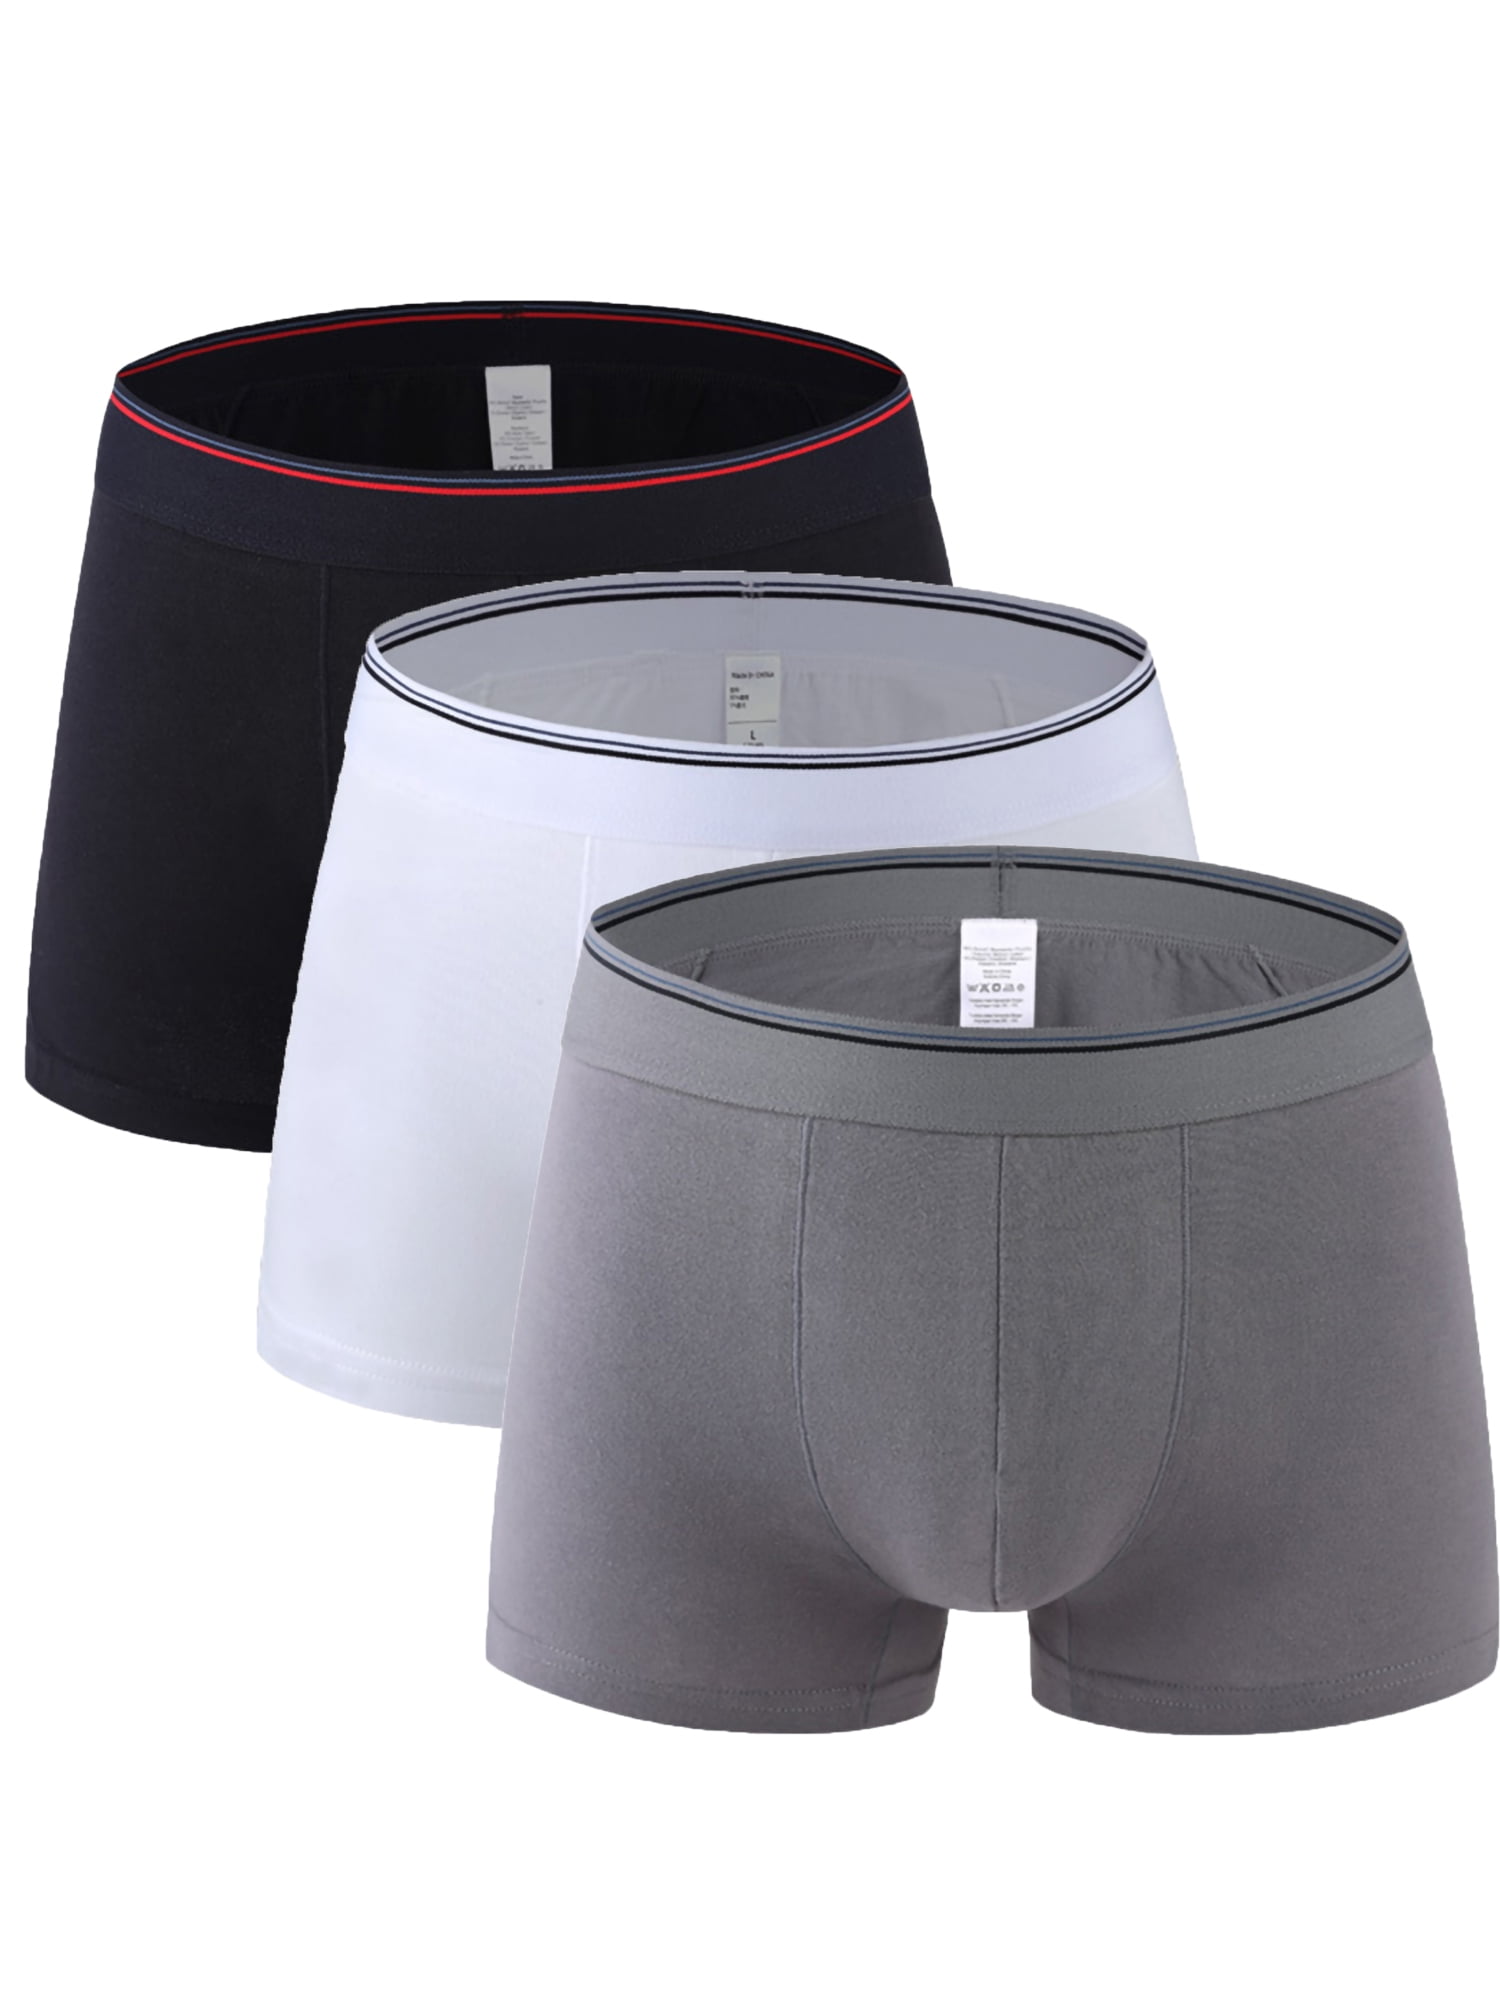 Men's Fashion Sports Cotton Trunks Boxer Solid Everyday Shorts Underwear S M L 